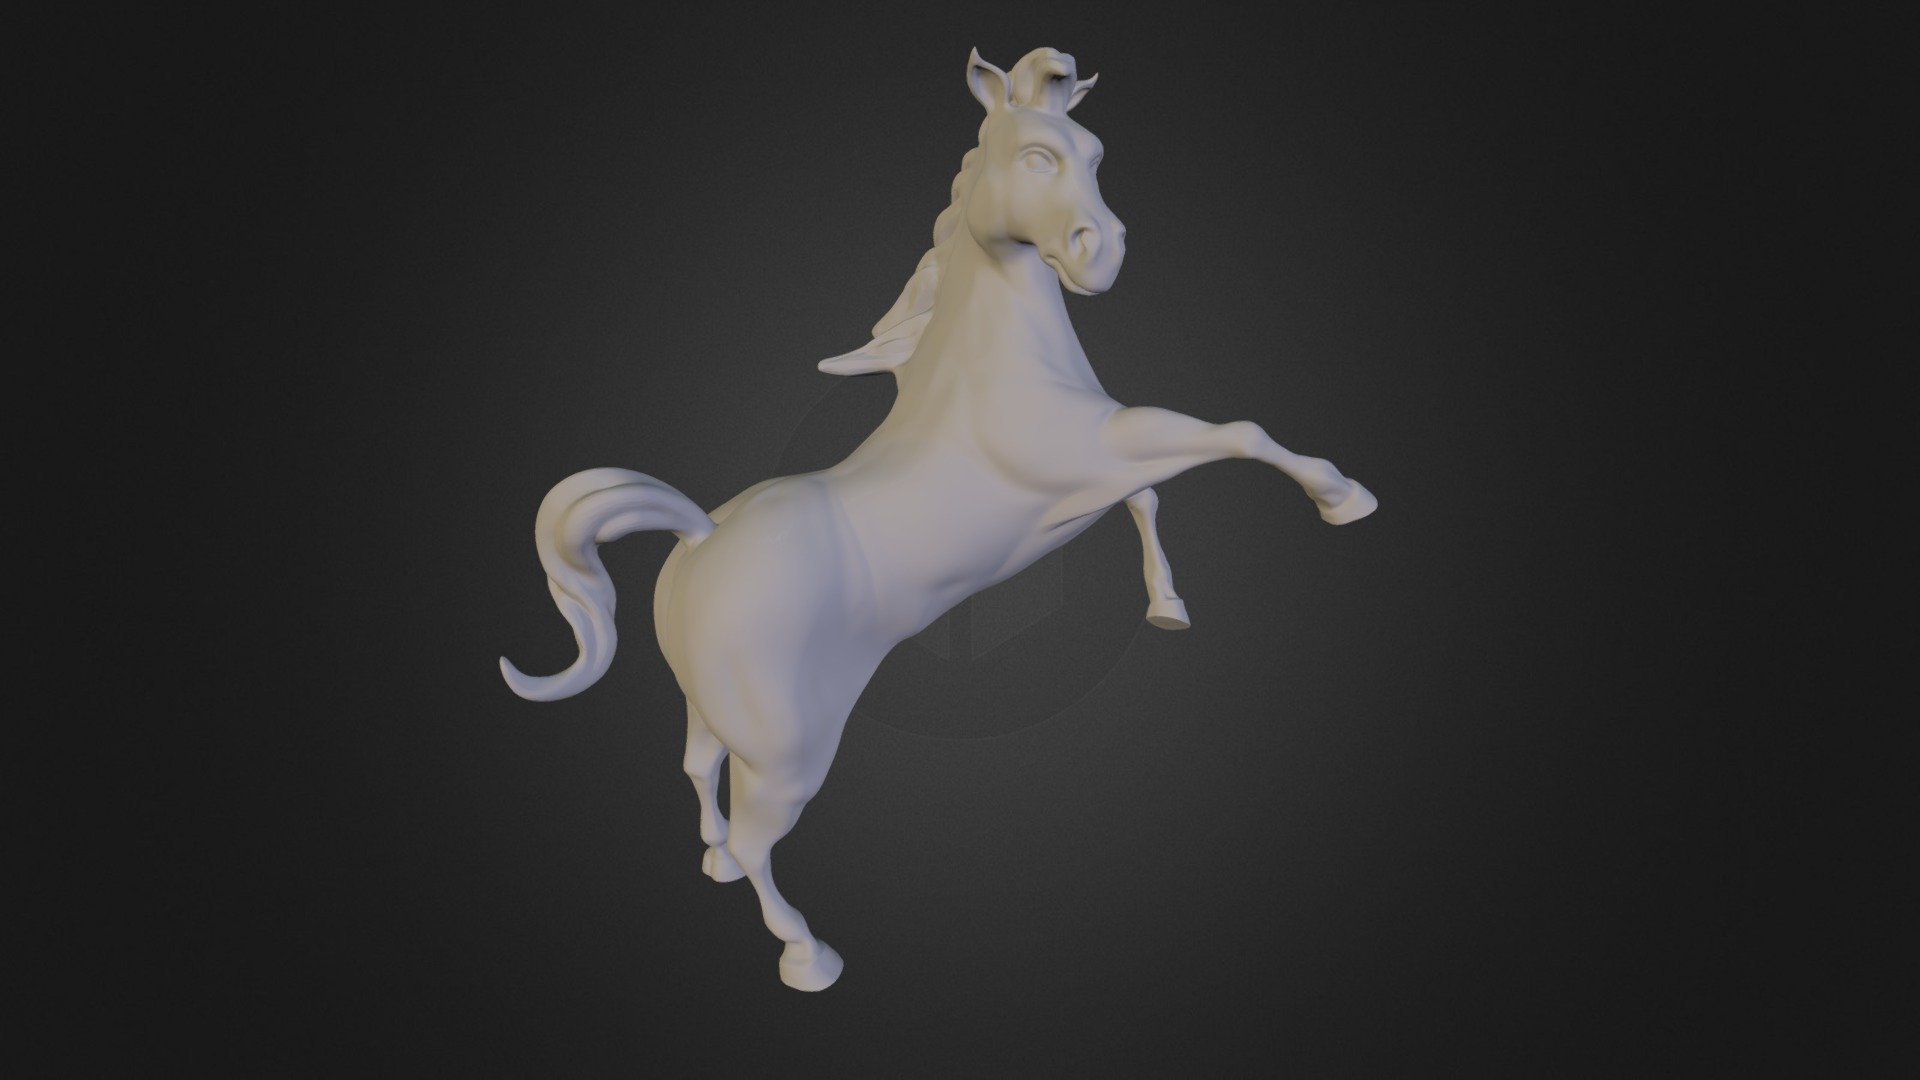 a horse doing horse stuff&hellip;
timelapse  http://youtu.be/8I1SPhUB9rU - Horse - 3D model by theWingedPlatypus 3d model